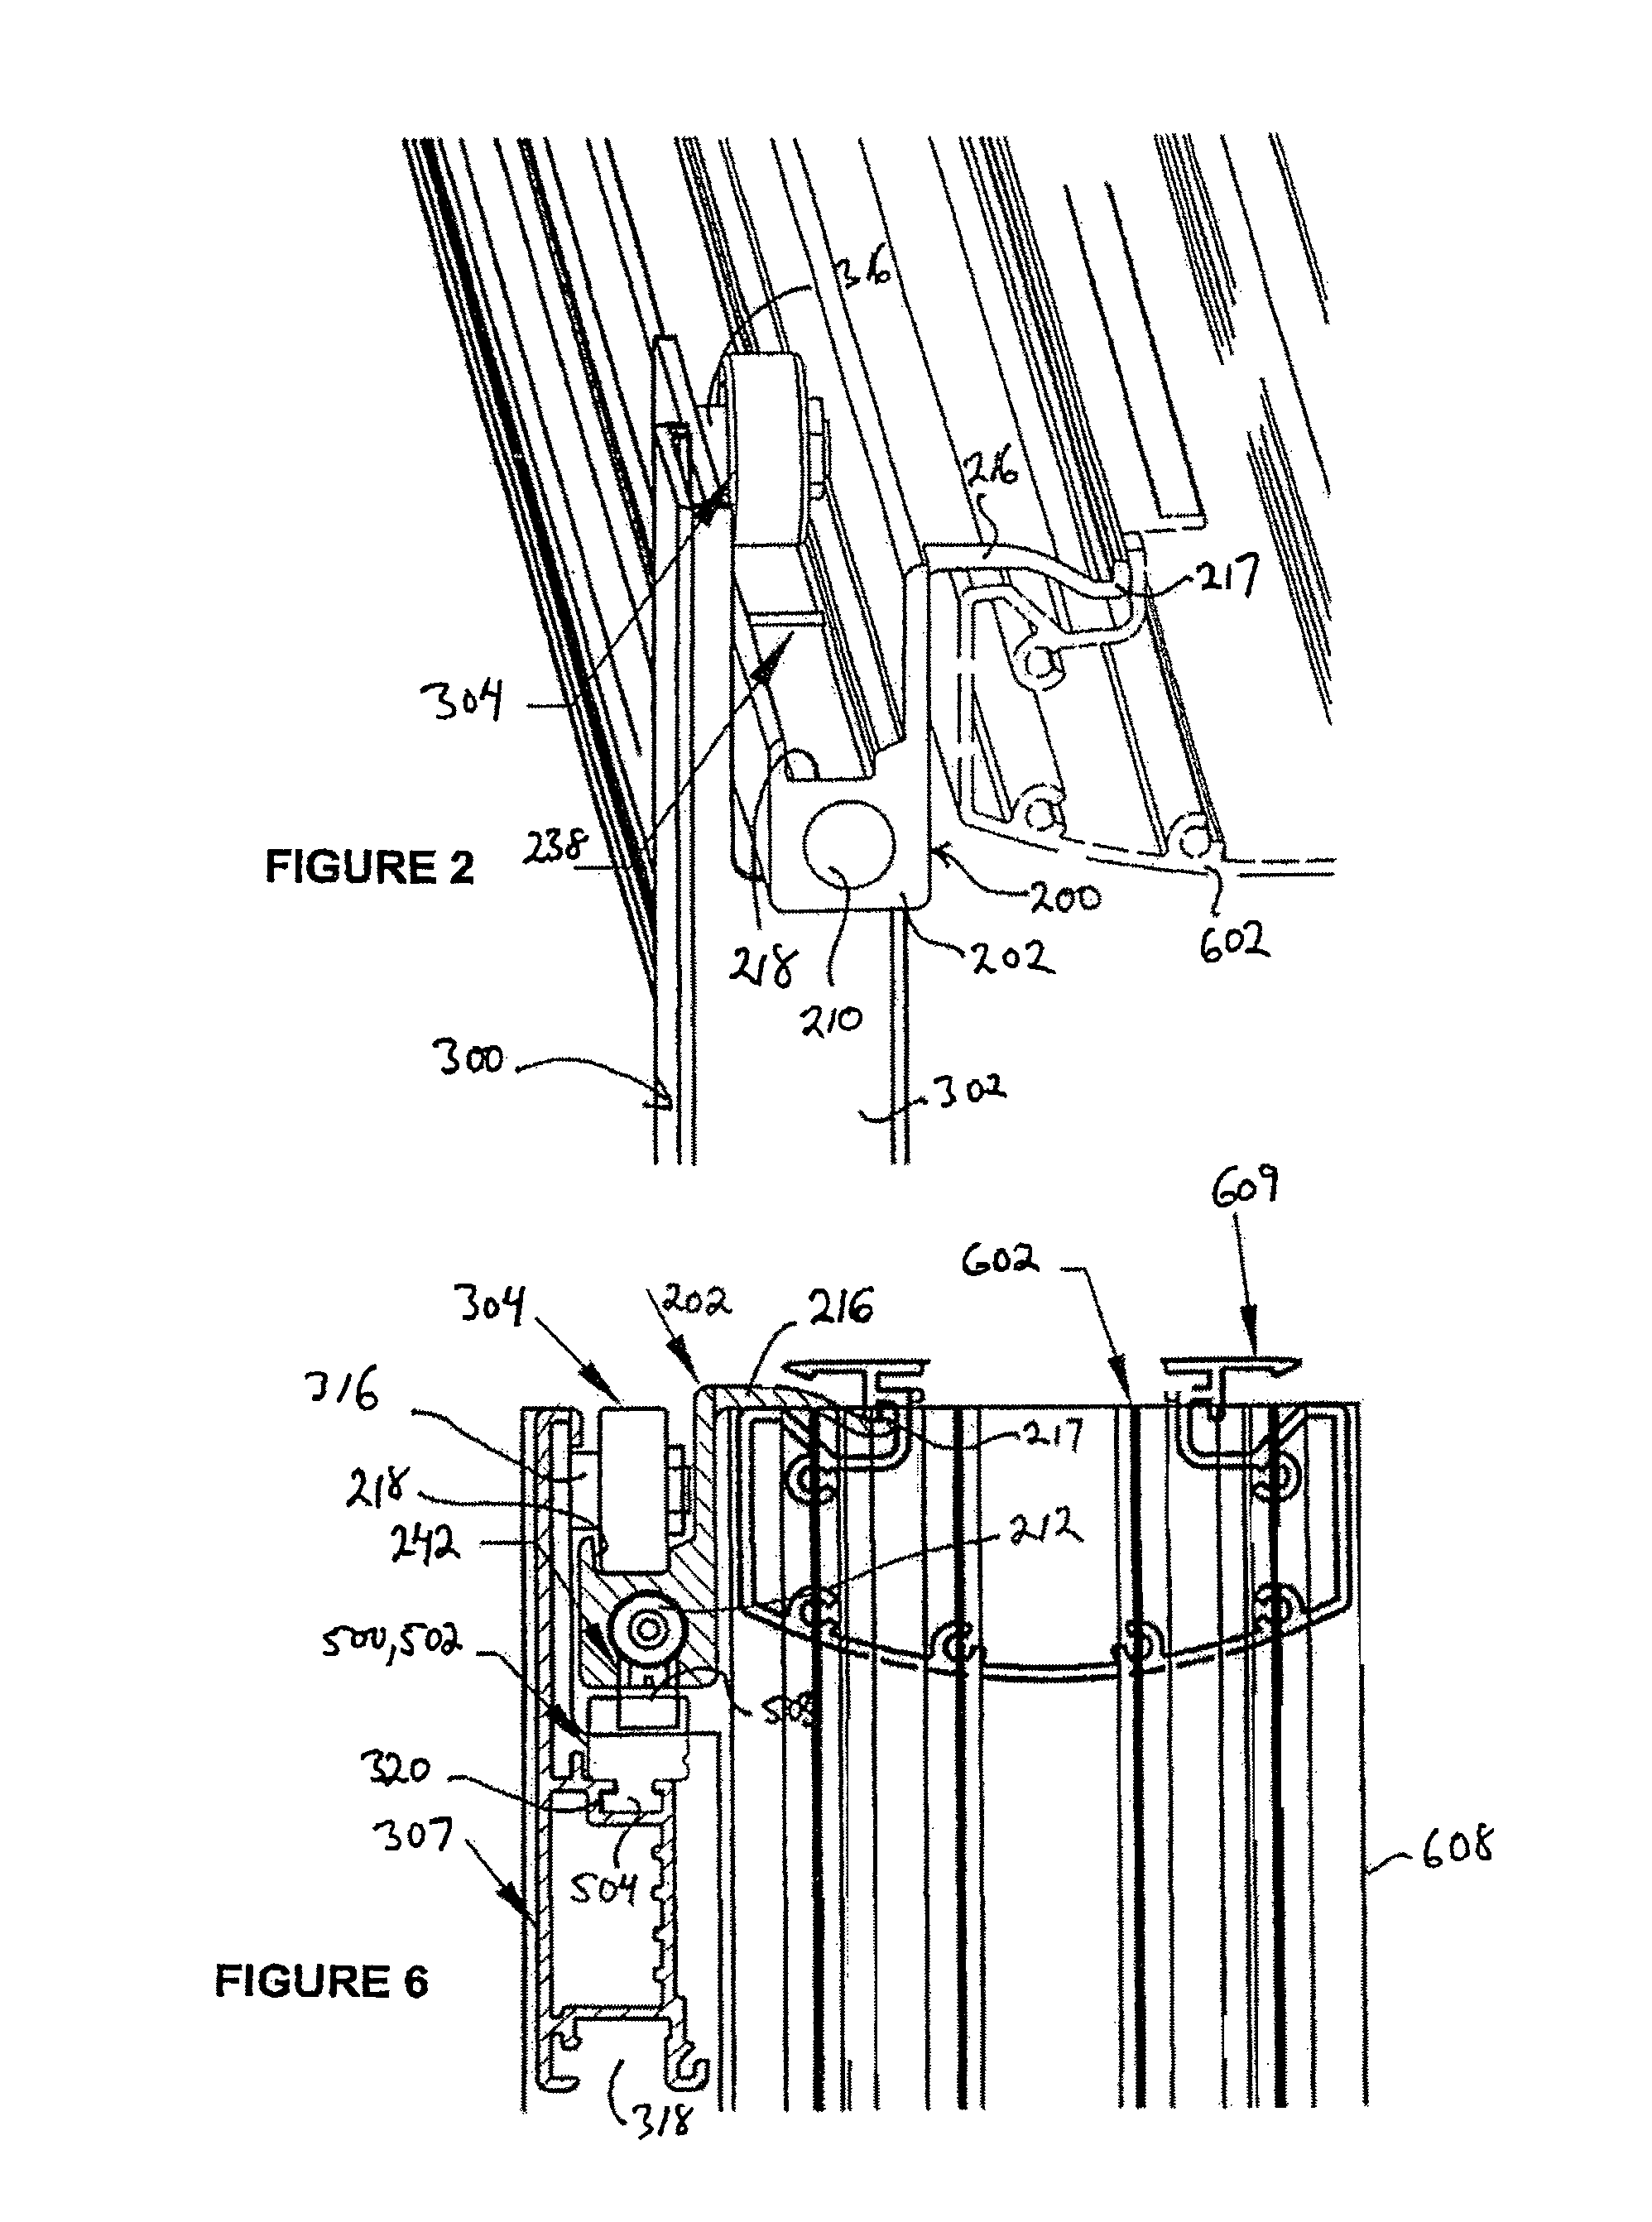 Sliding door apparatus having a damping mechanism